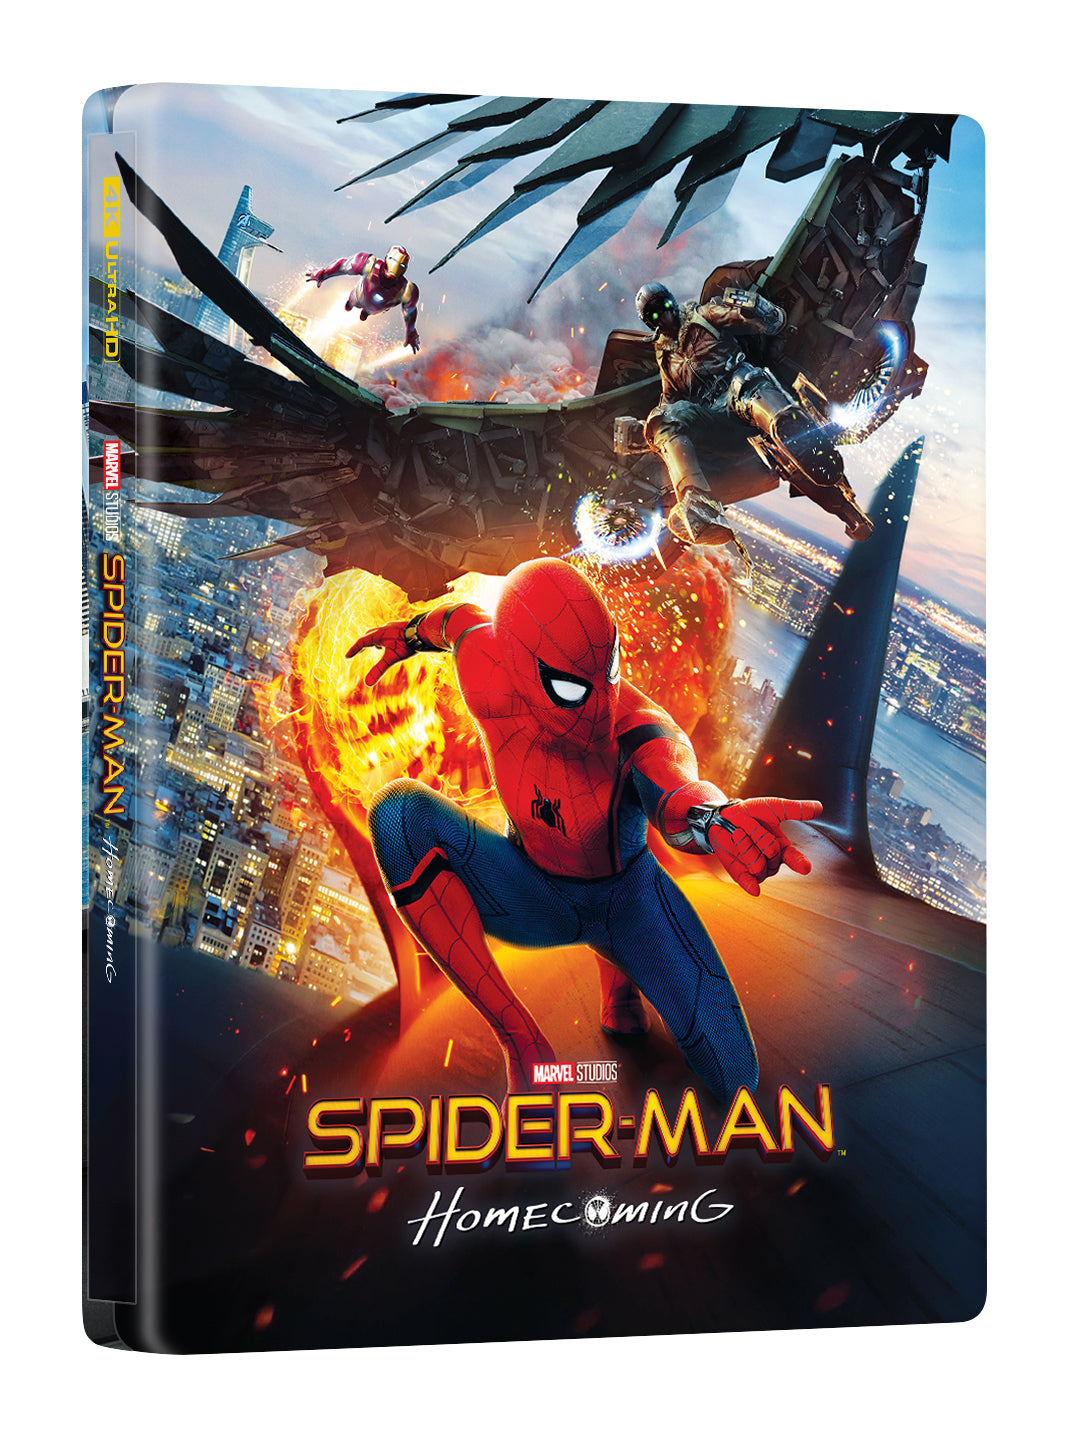 Spider-Man: Homecoming 4K Full Slip SteelBook (ME#64)(Hong Kong)